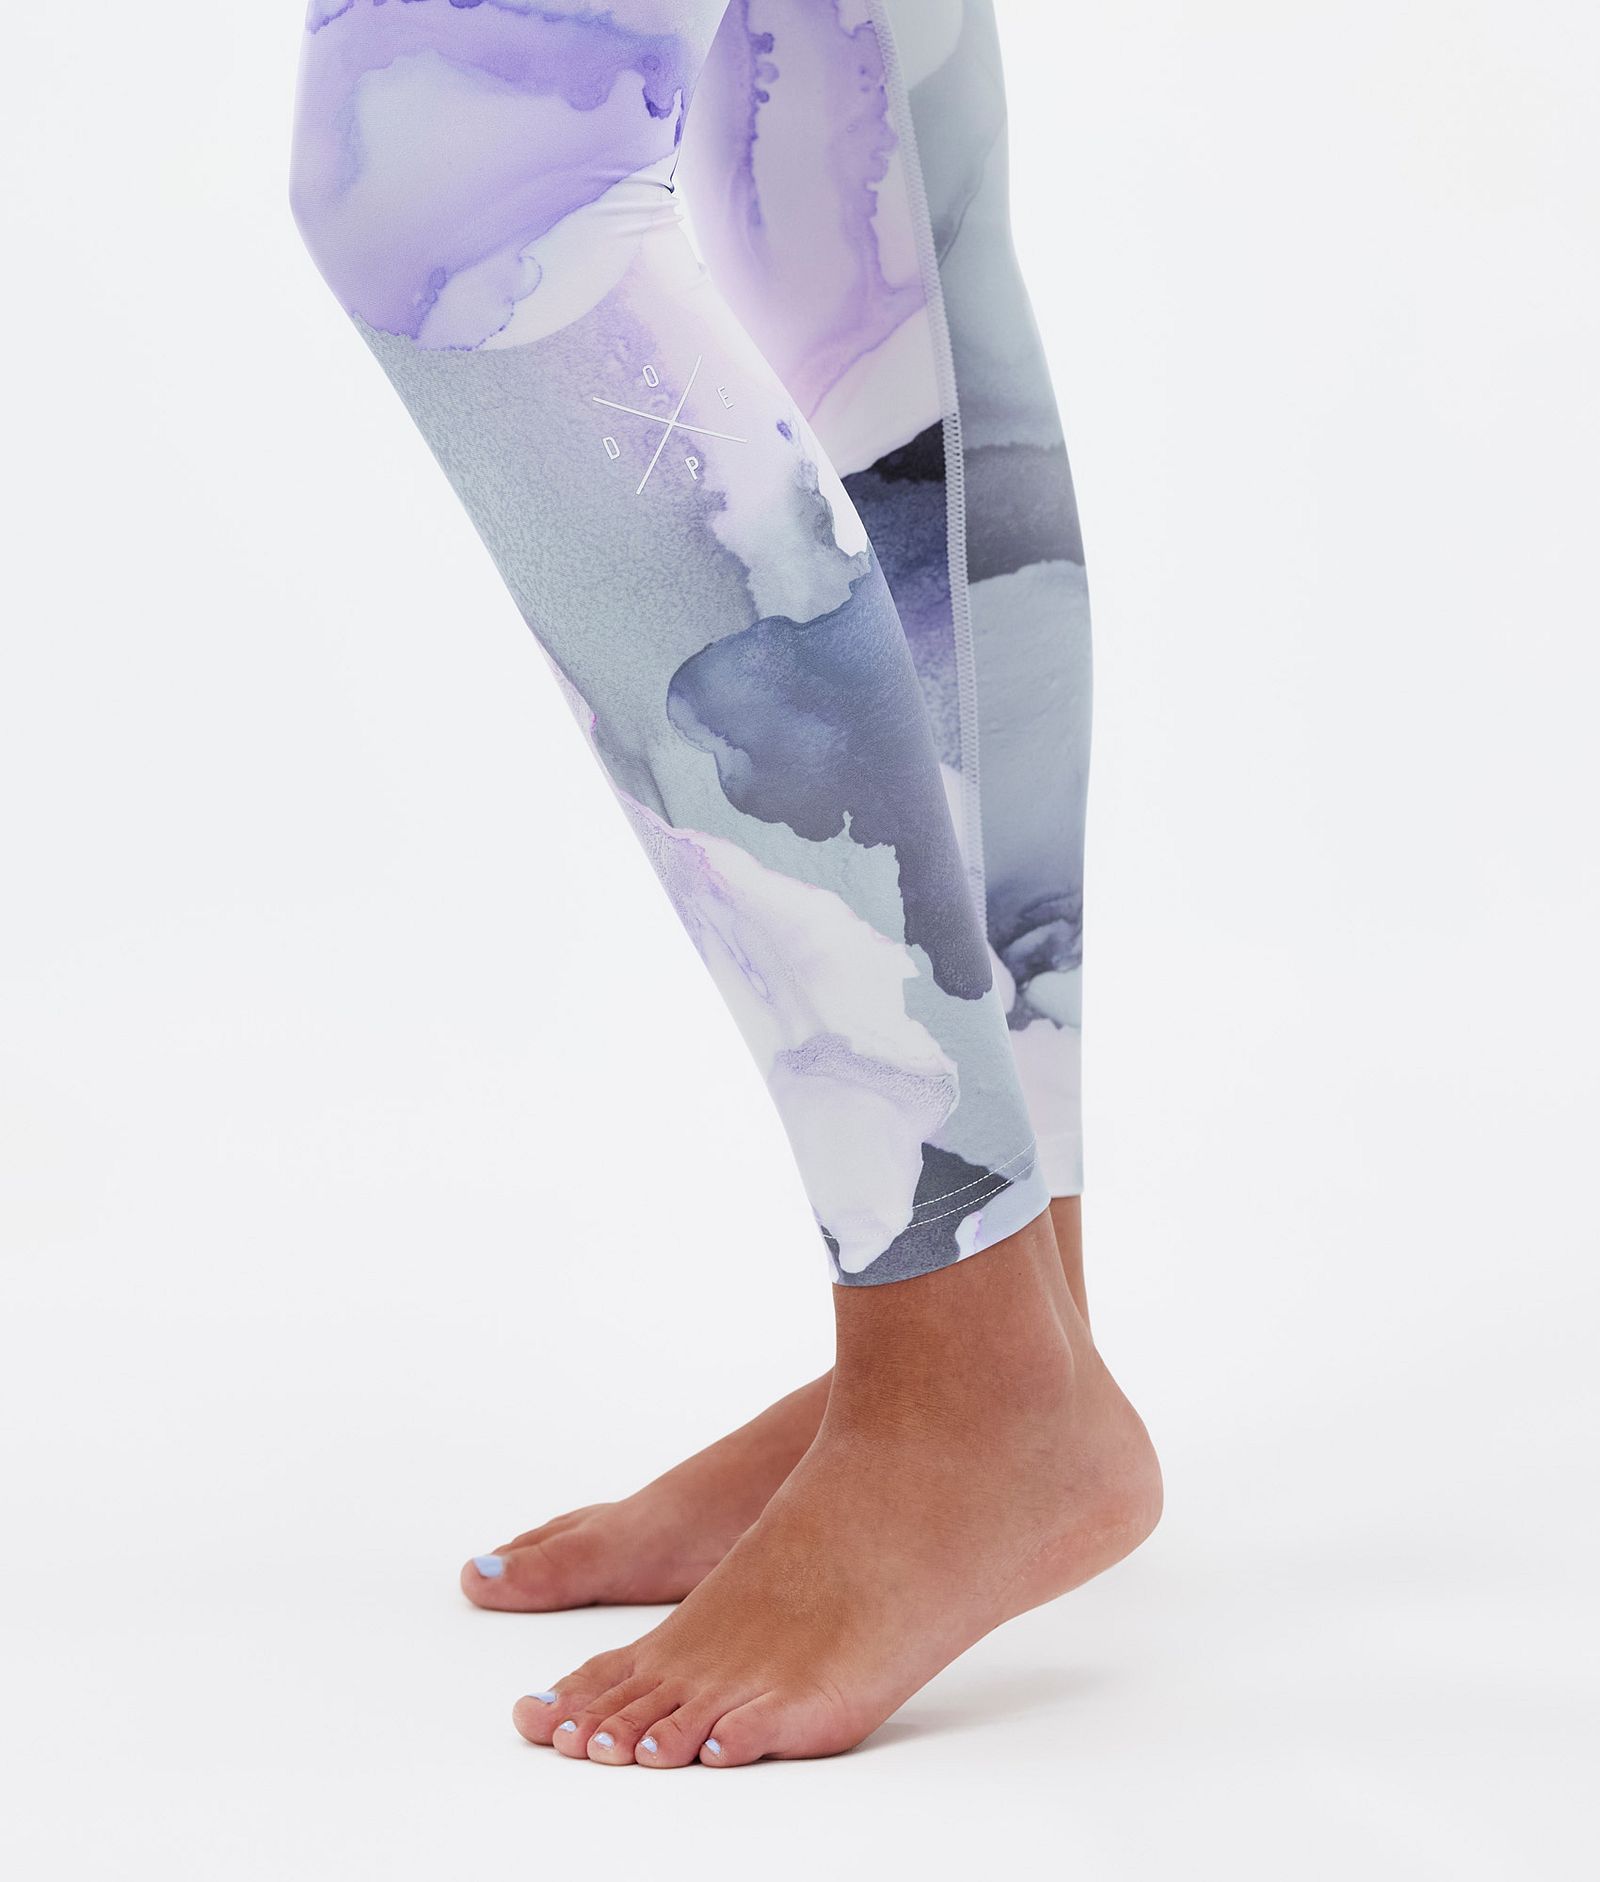 Dope Snuggle W 2022 Pantalón Térmico Mujer 2X-Up Blot Violet